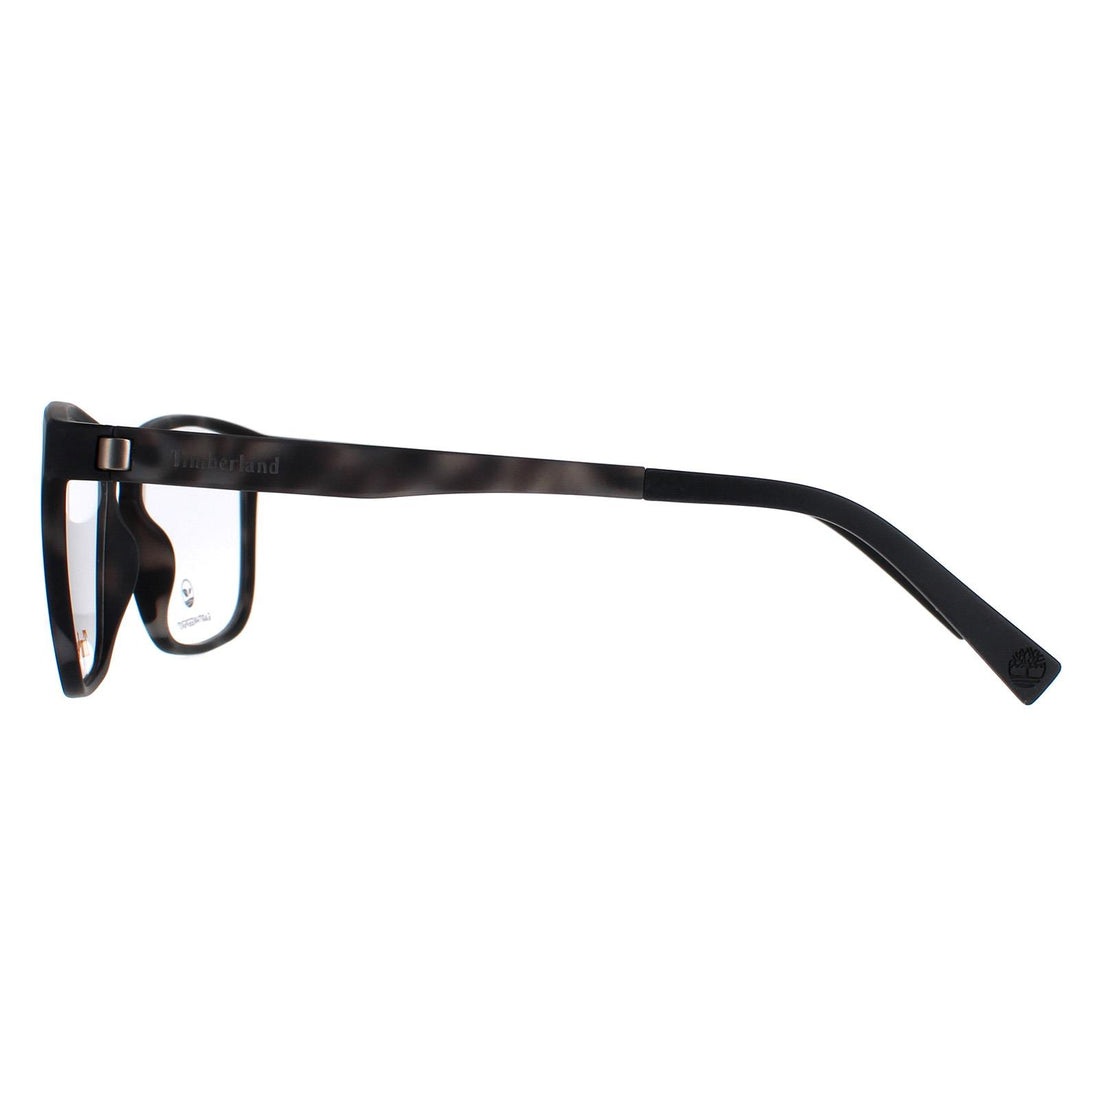 Timberland TB1598 Glasses Frames